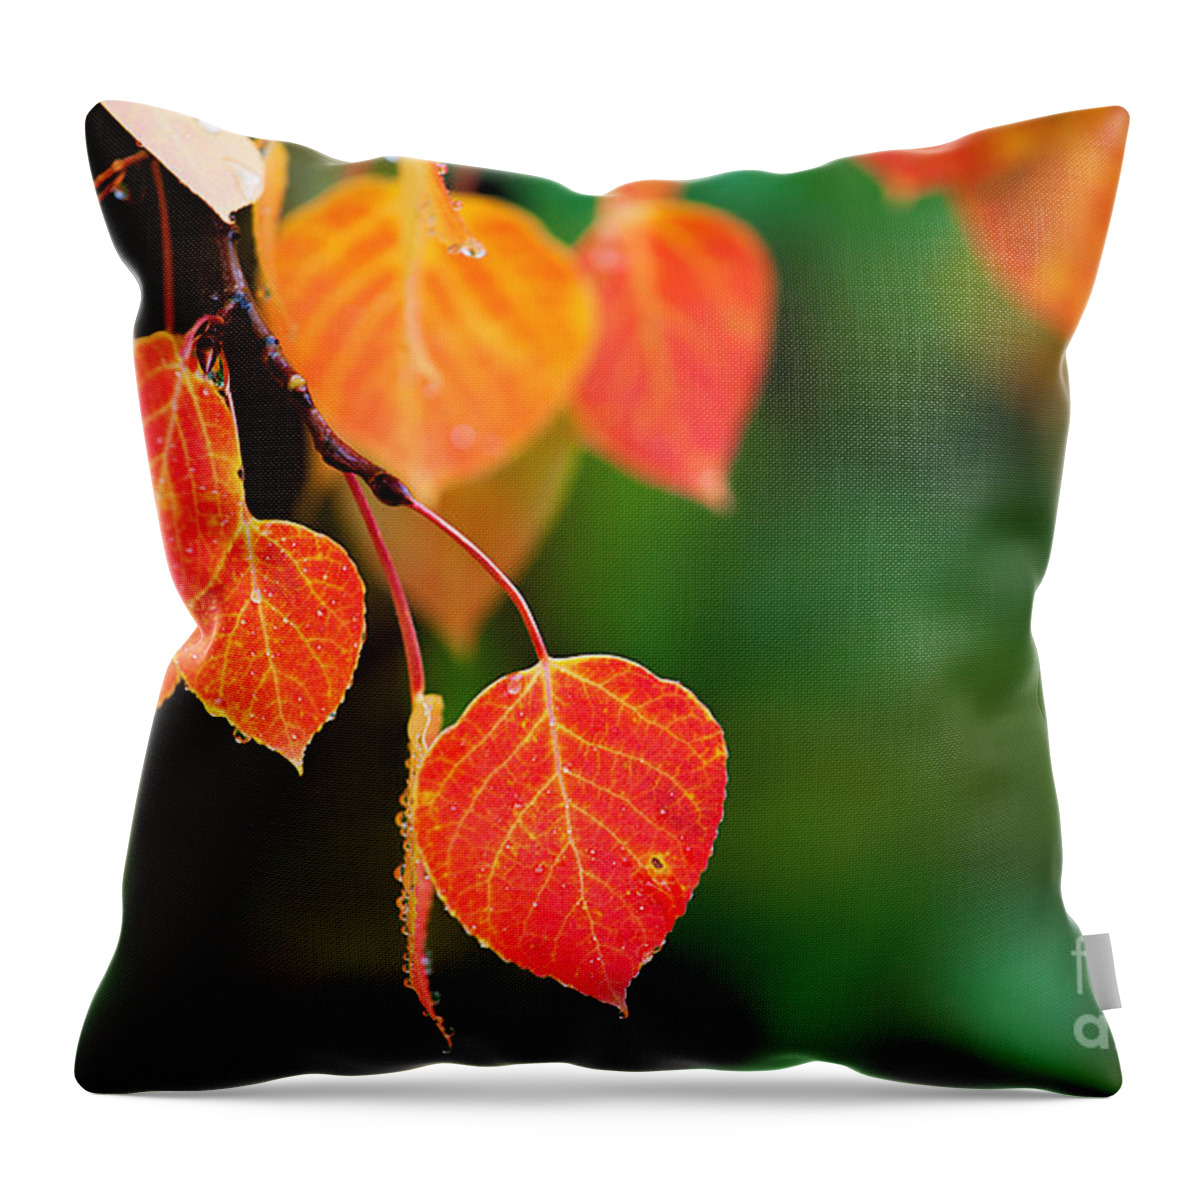 Autumn Colors Throw Pillow featuring the photograph Autumn Curtain #1 by Jim Garrison